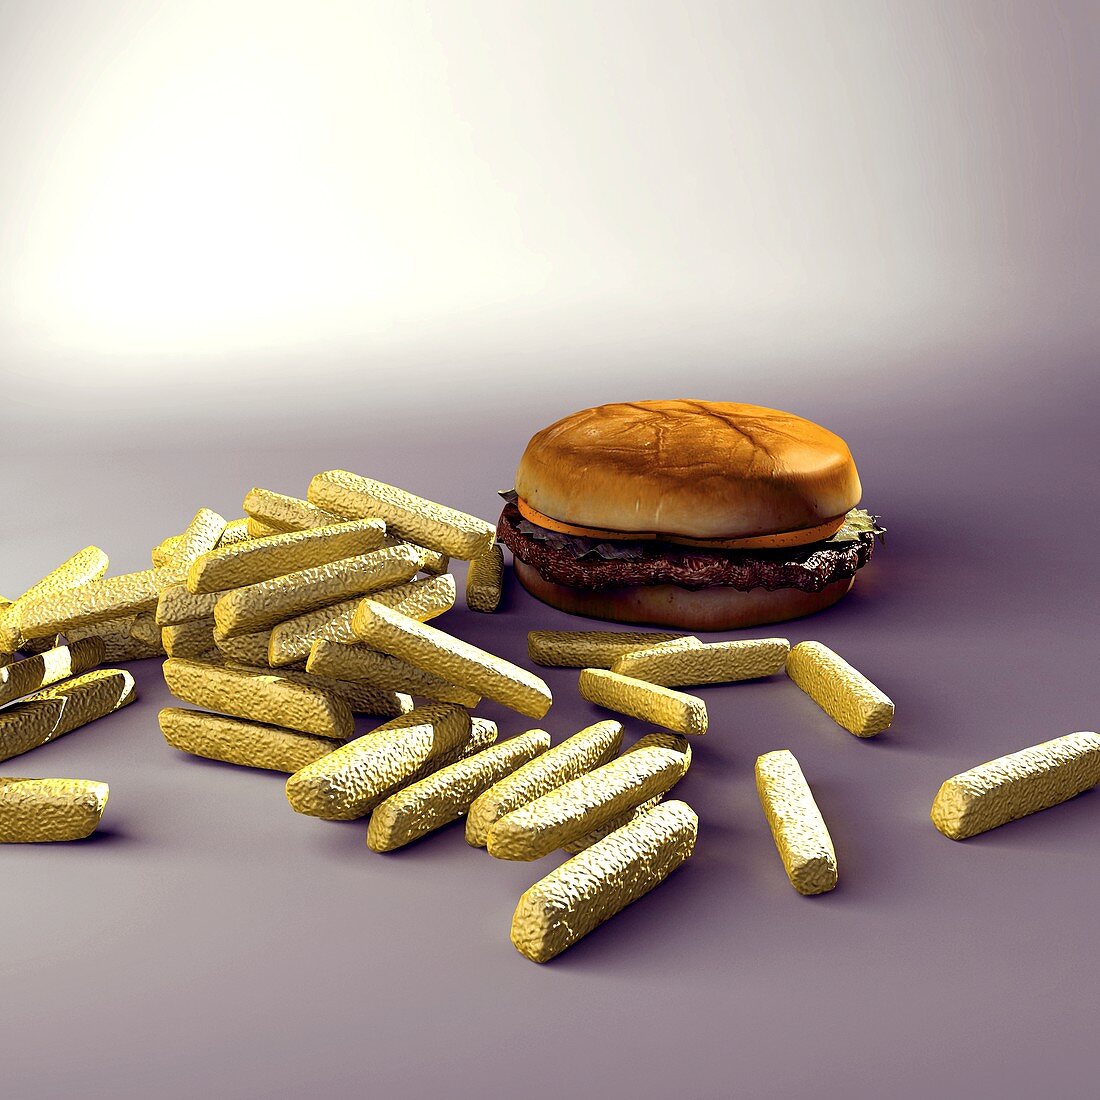 Burger and chips,computer artwork